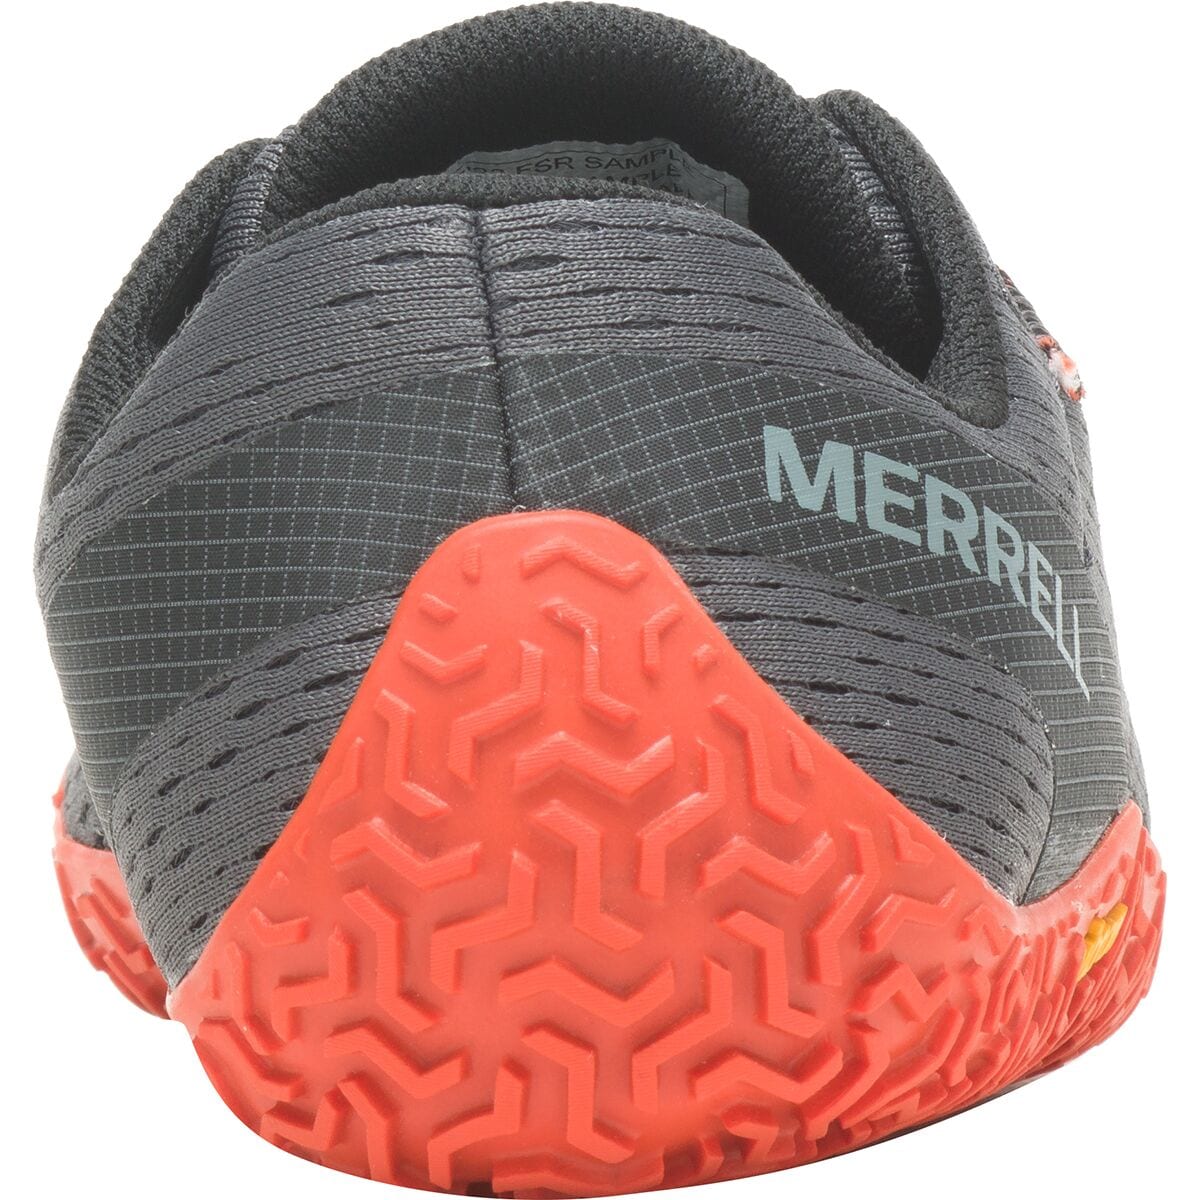 Merrell Vapor Glove 6 LTR Earth - zapatillas minimalistas - Nonstop